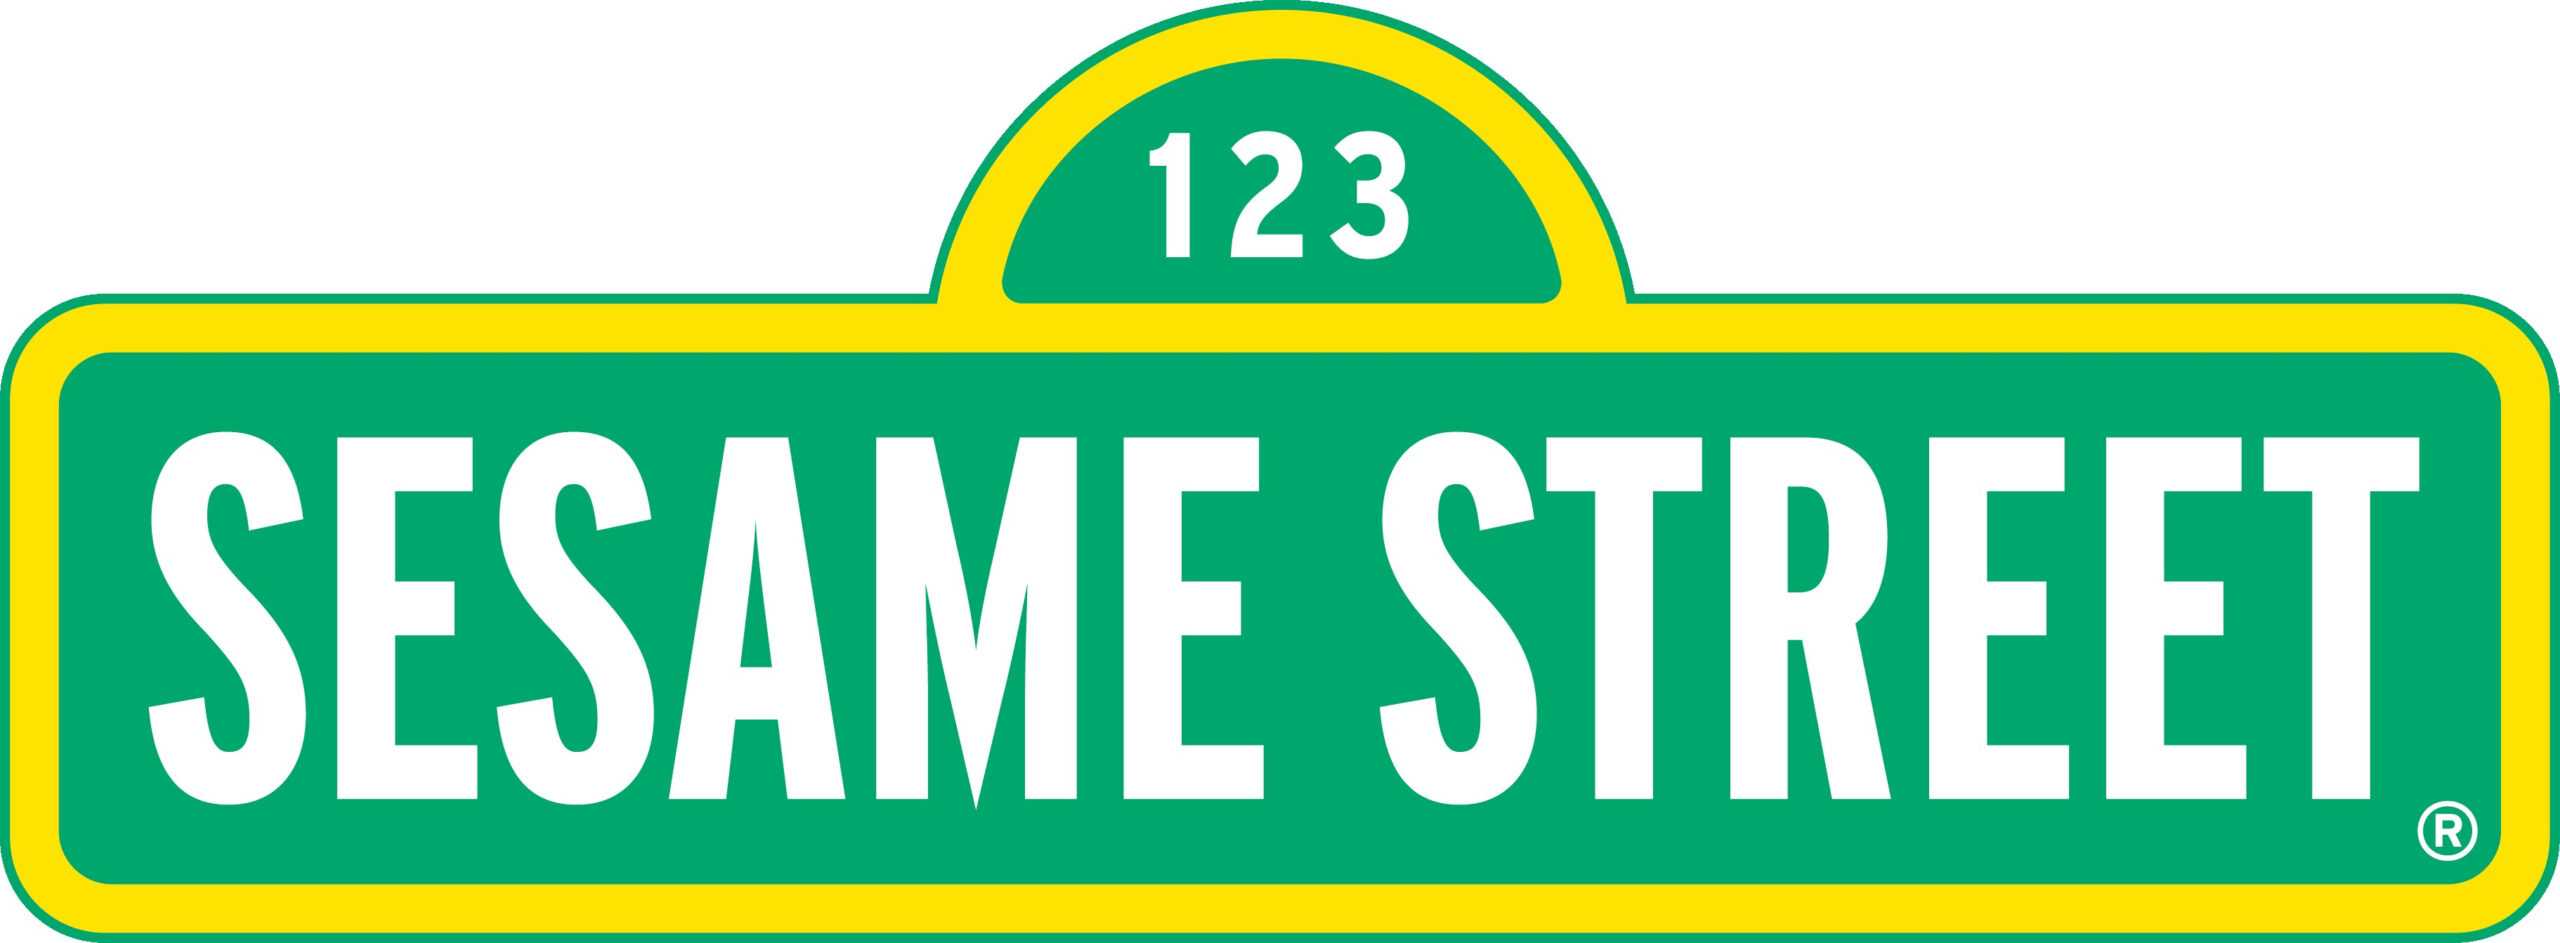 Sesame Street Sign Clipart With Sesame Street Banner Template